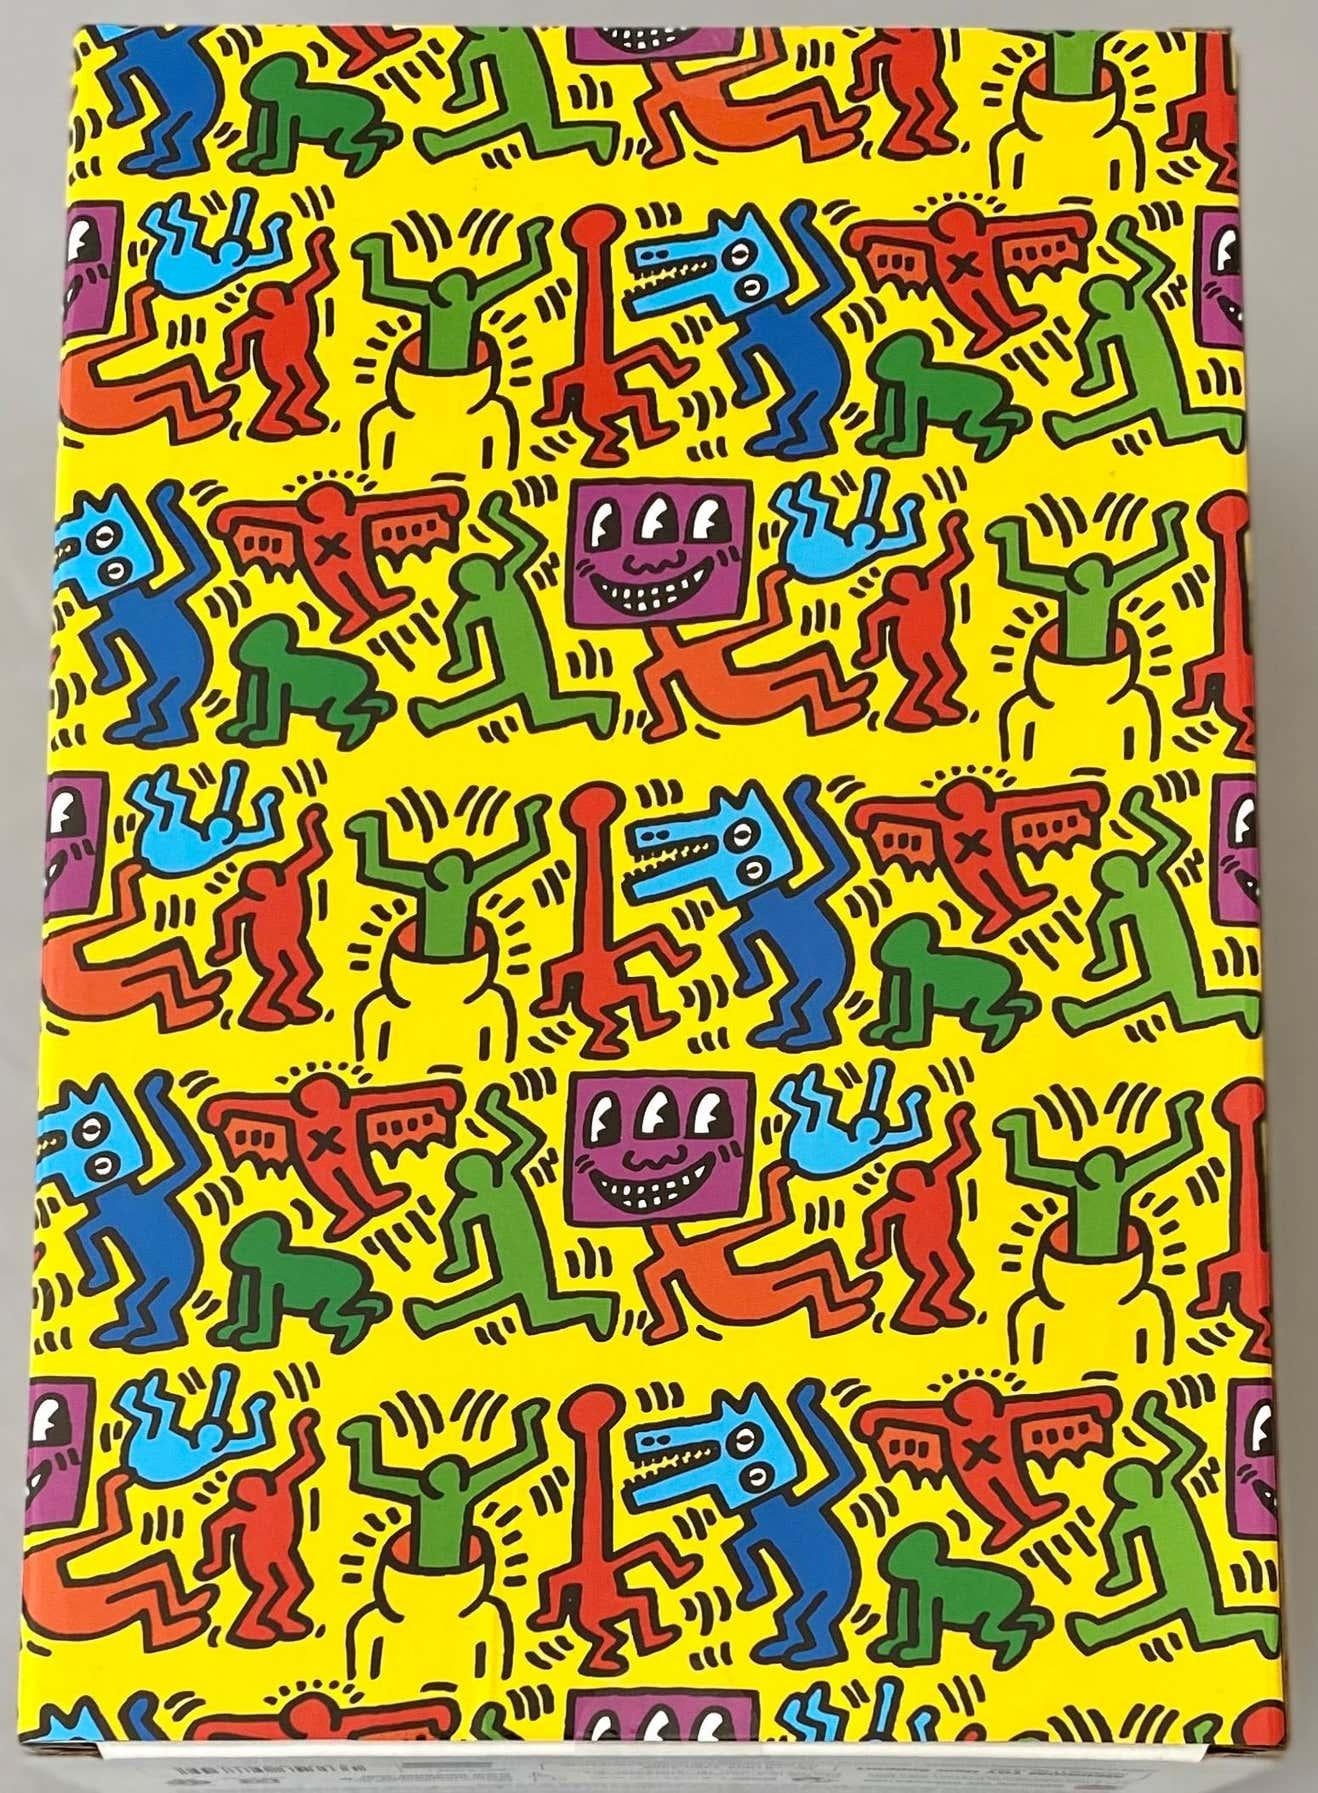 Keith Haring, Andy Warhol, Jean-Michel Basquiat Bearbrick 400%: set of 3 works  1